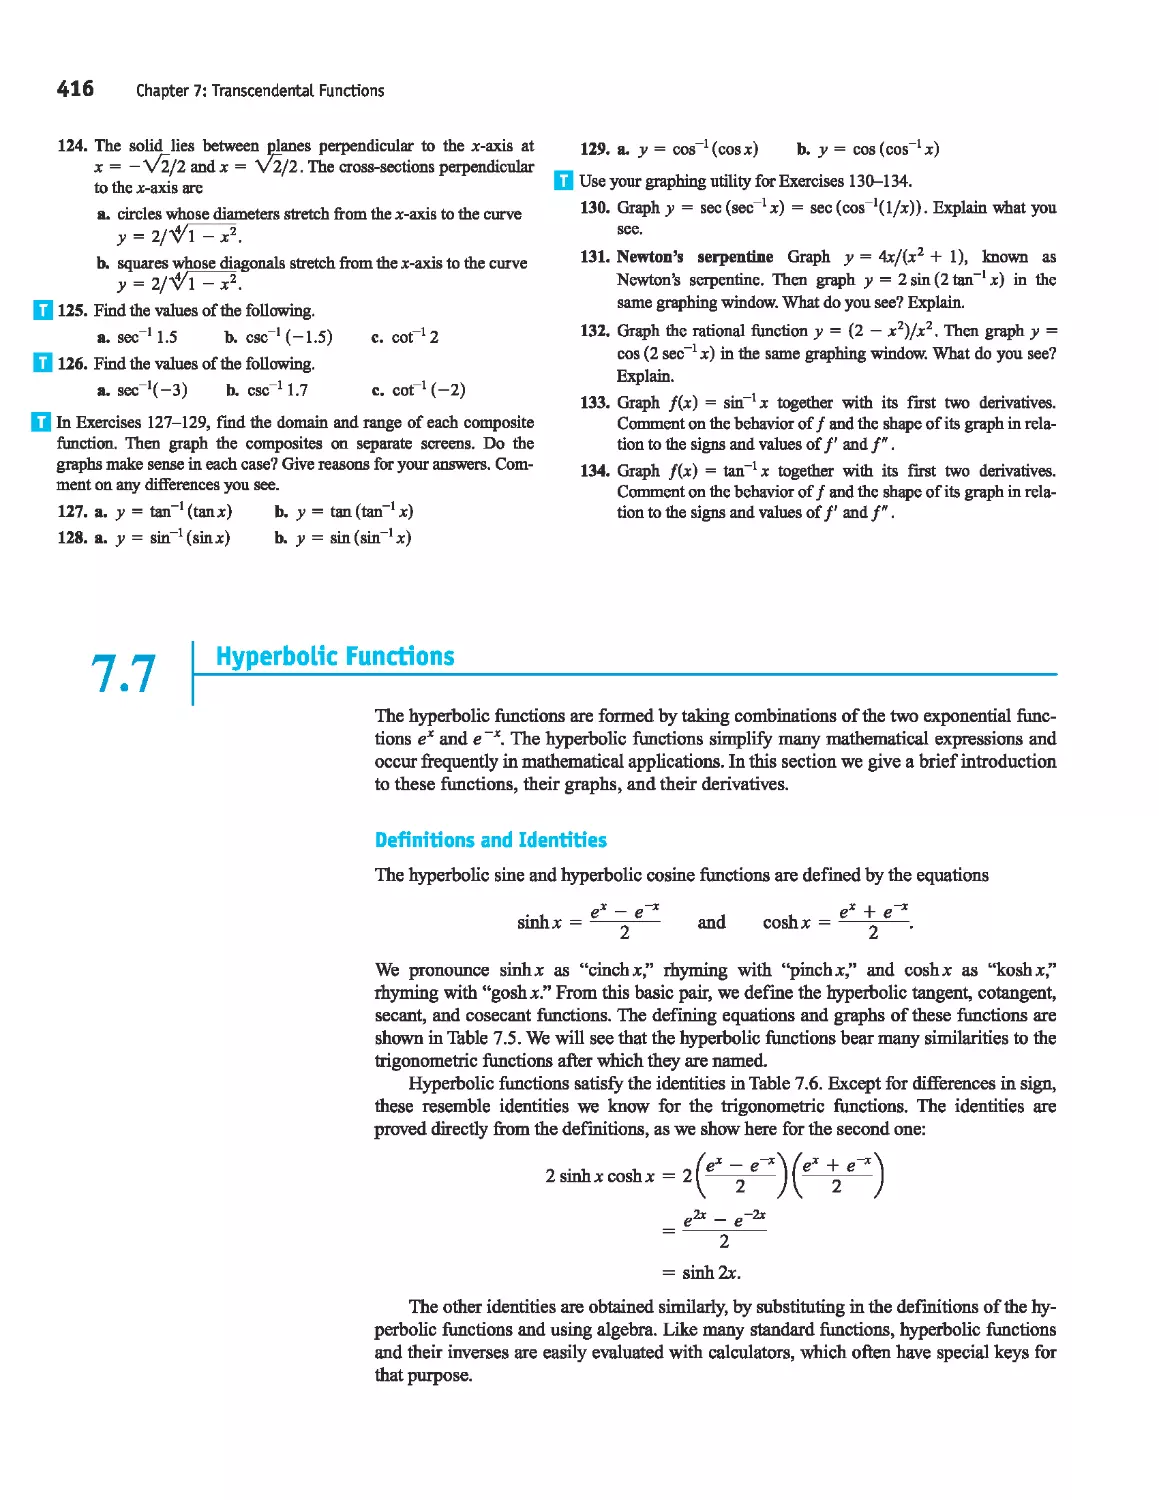 7.7 - 
Hyperbolic Functions